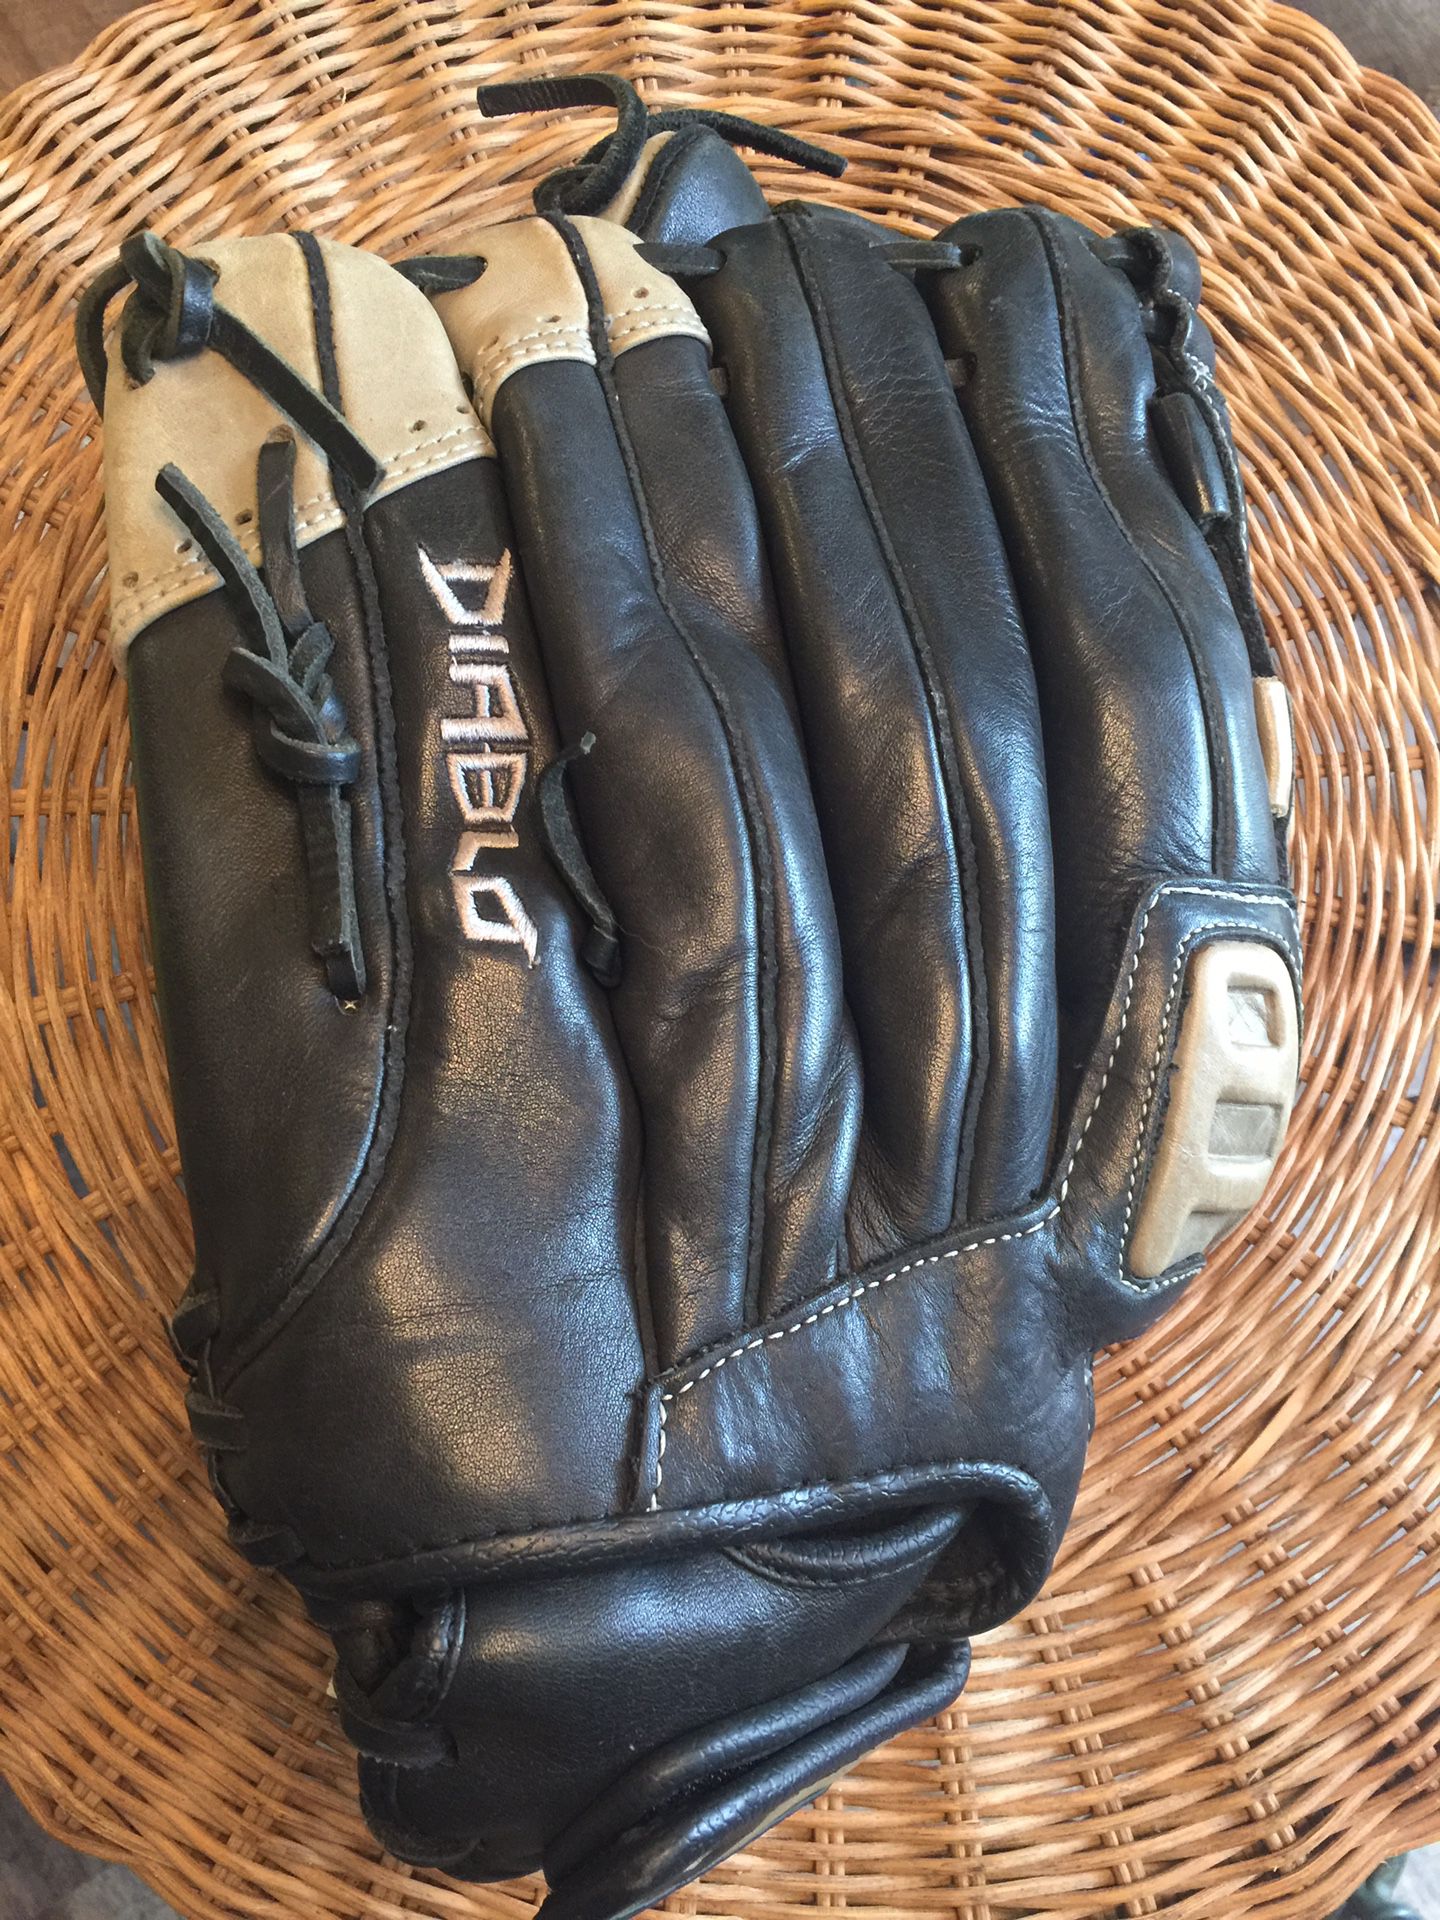 Softball Glove 12” Diablo right handed